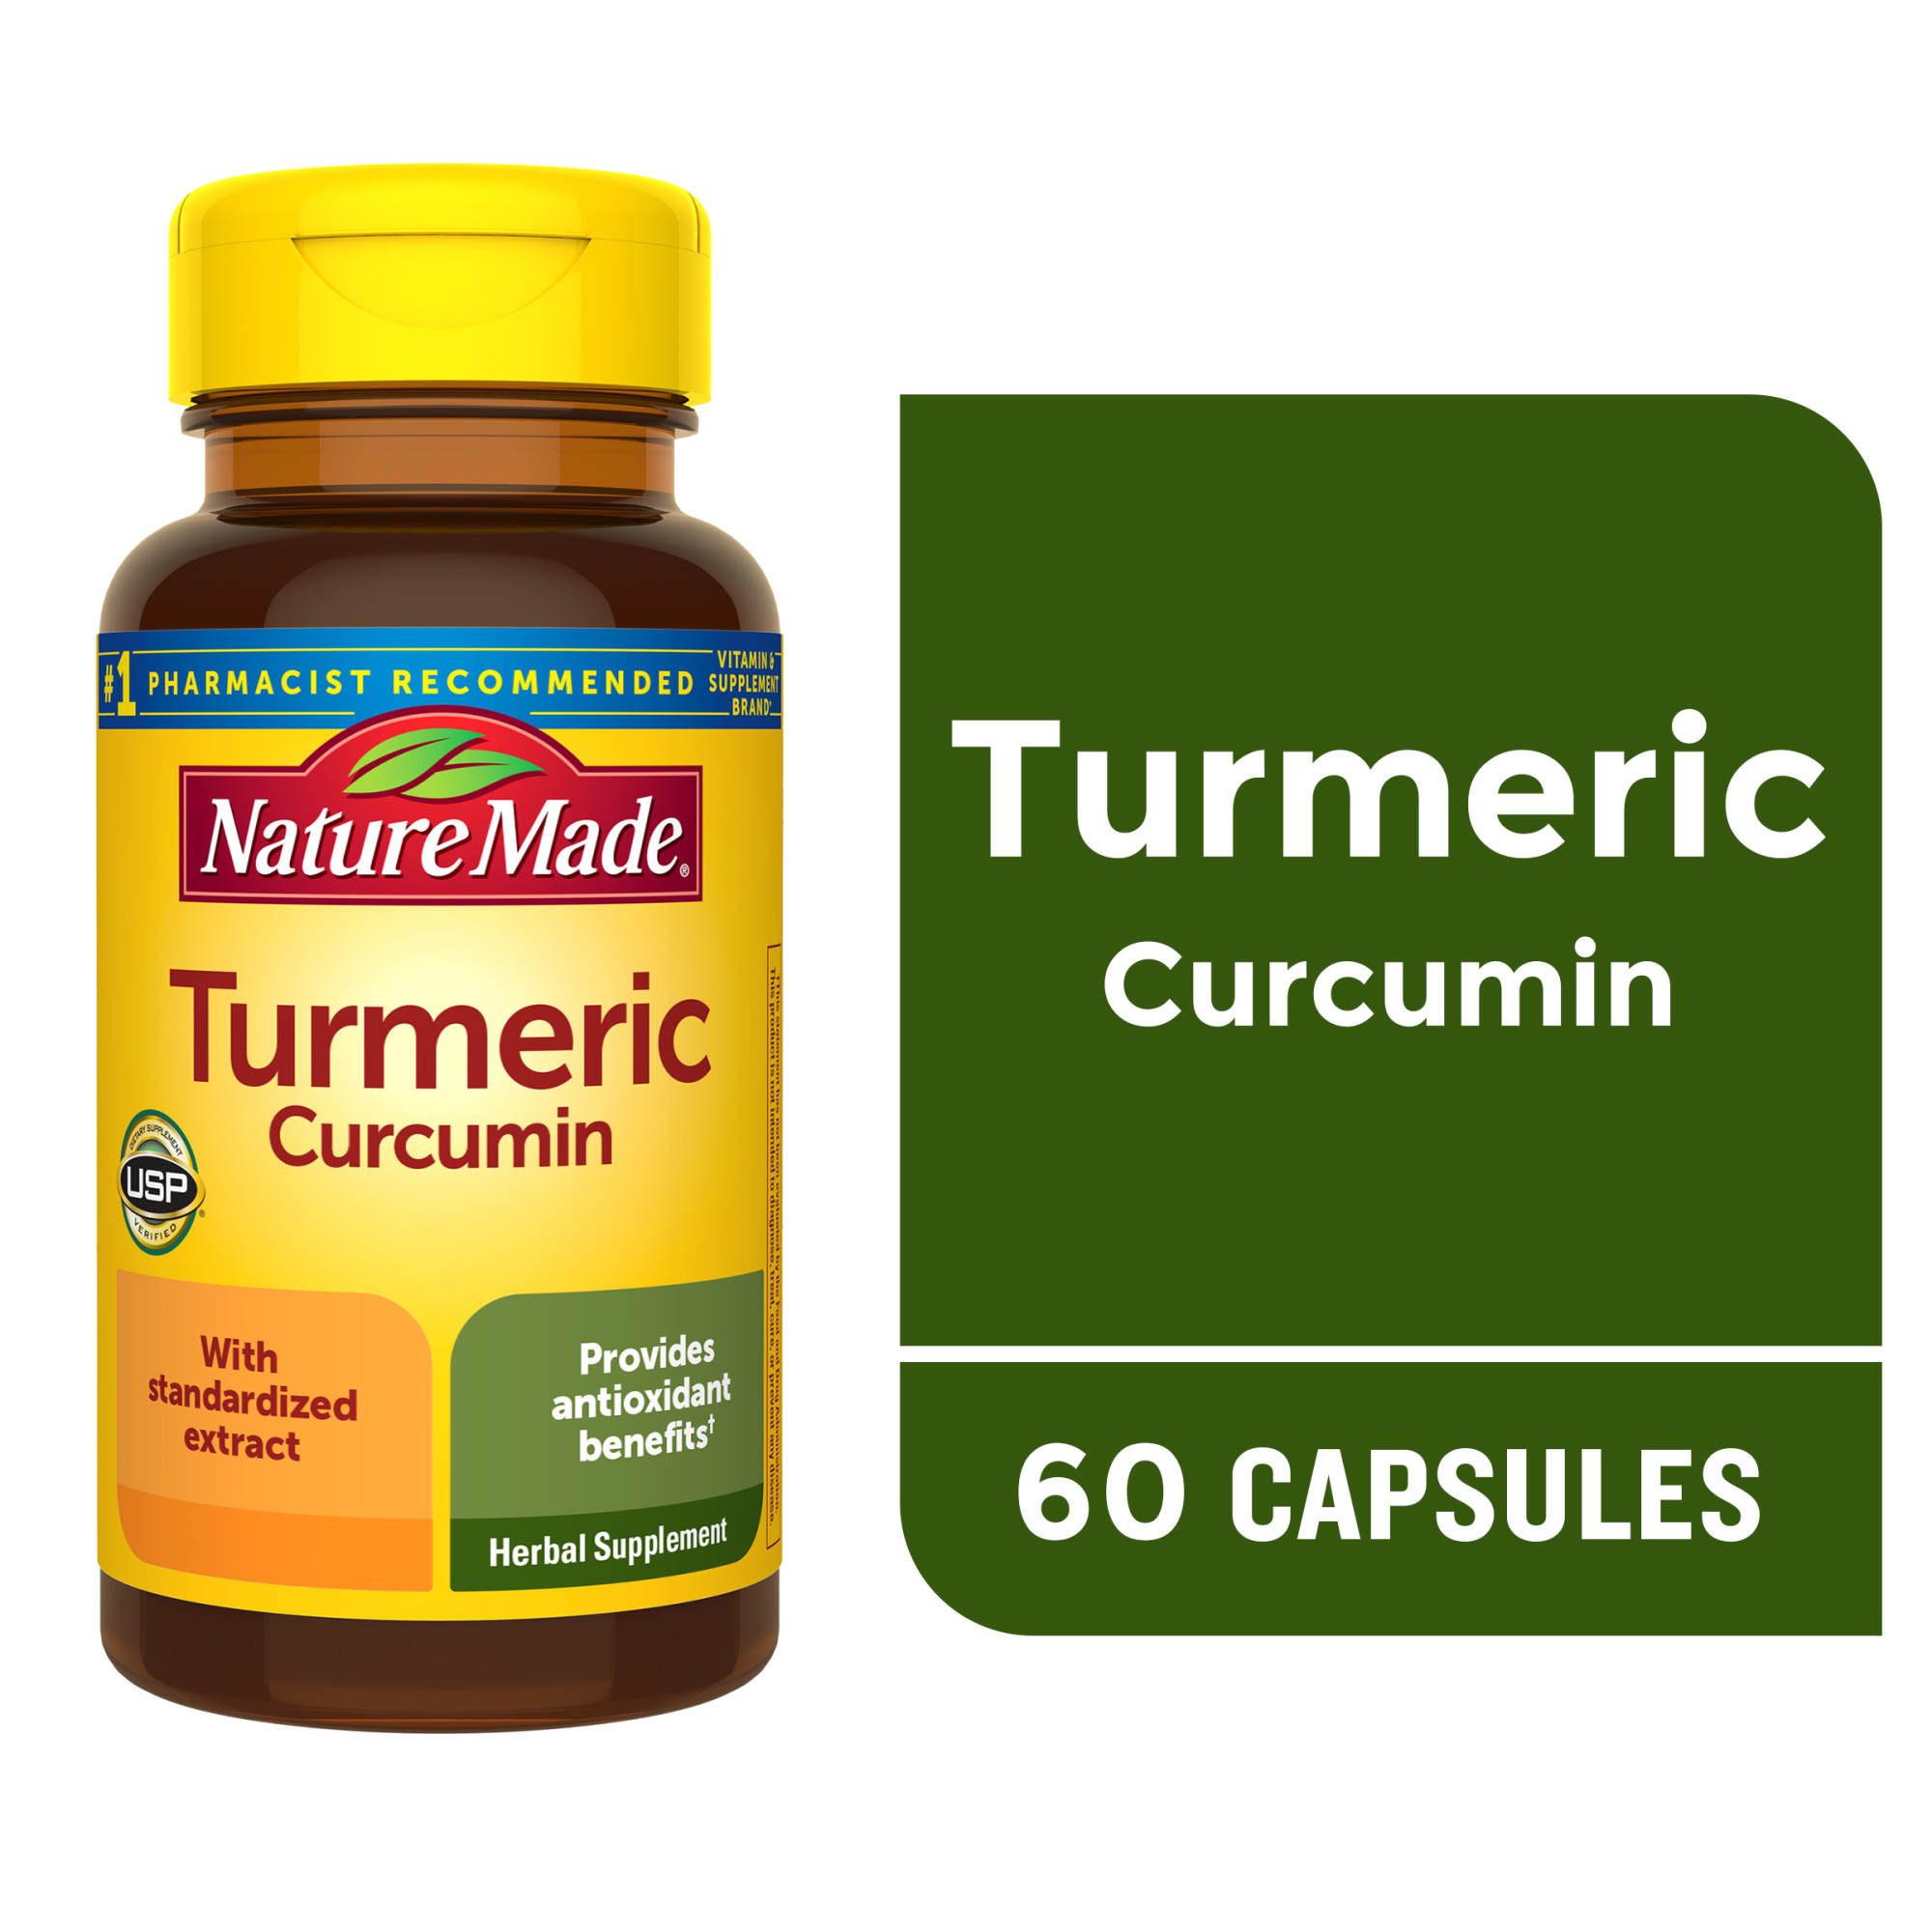 Nature Made Turmeric Curcumin 500 mg Capsules, Herbal Supplement, 60 Count - image 1 of 10